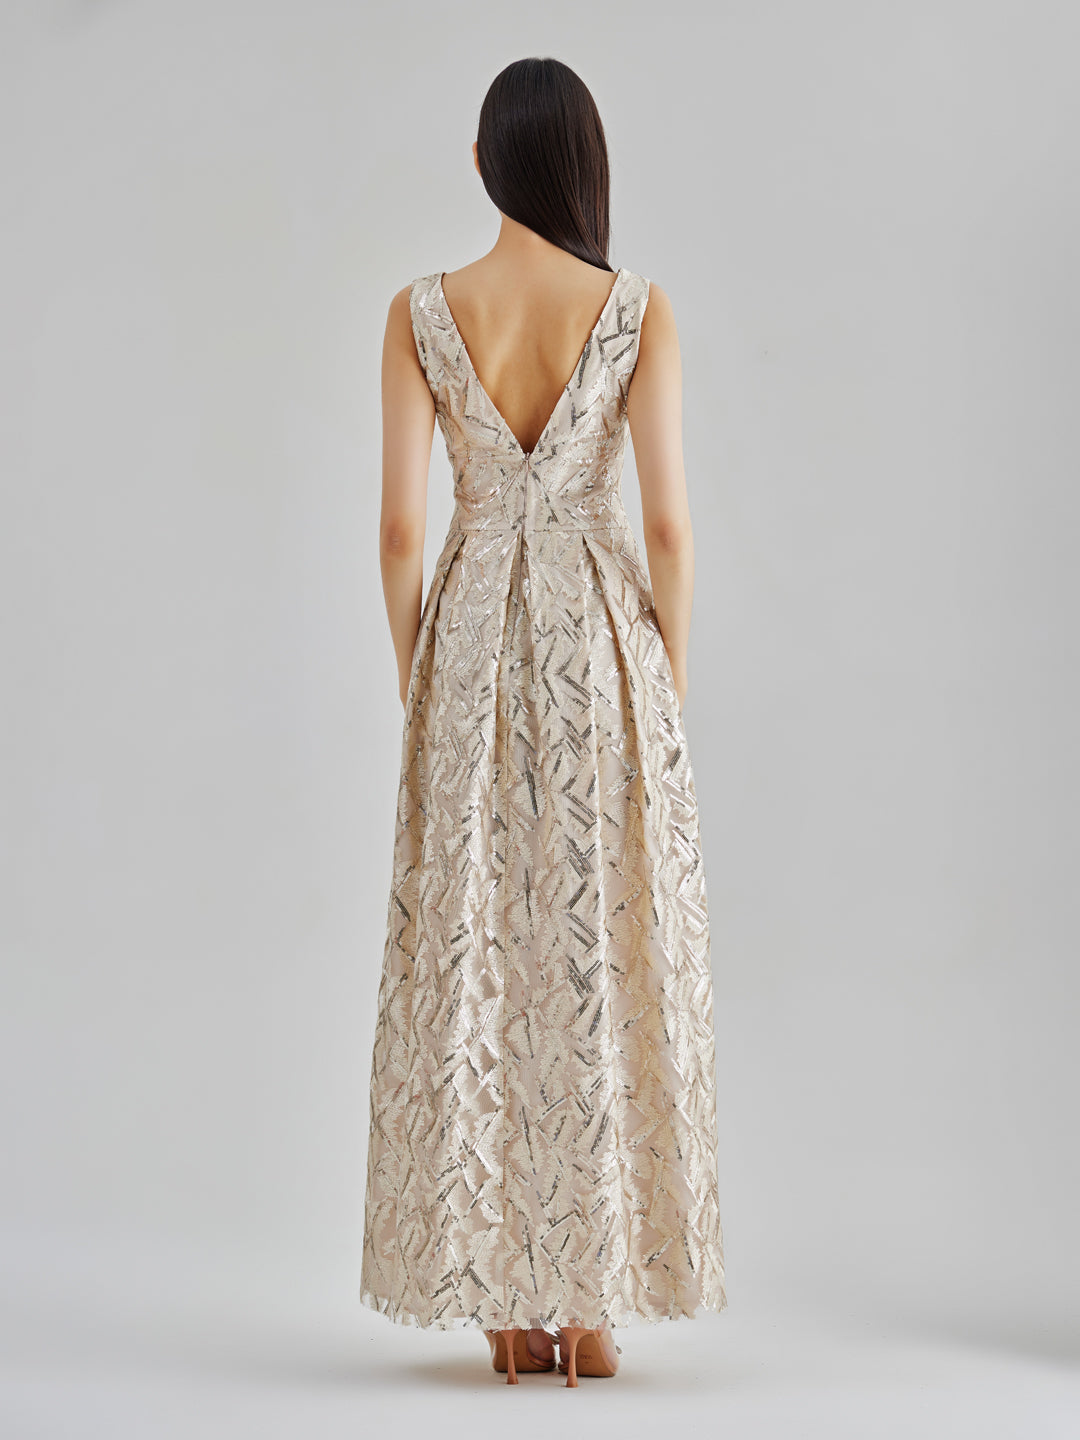 Lea Line Sequin Gown Champagne